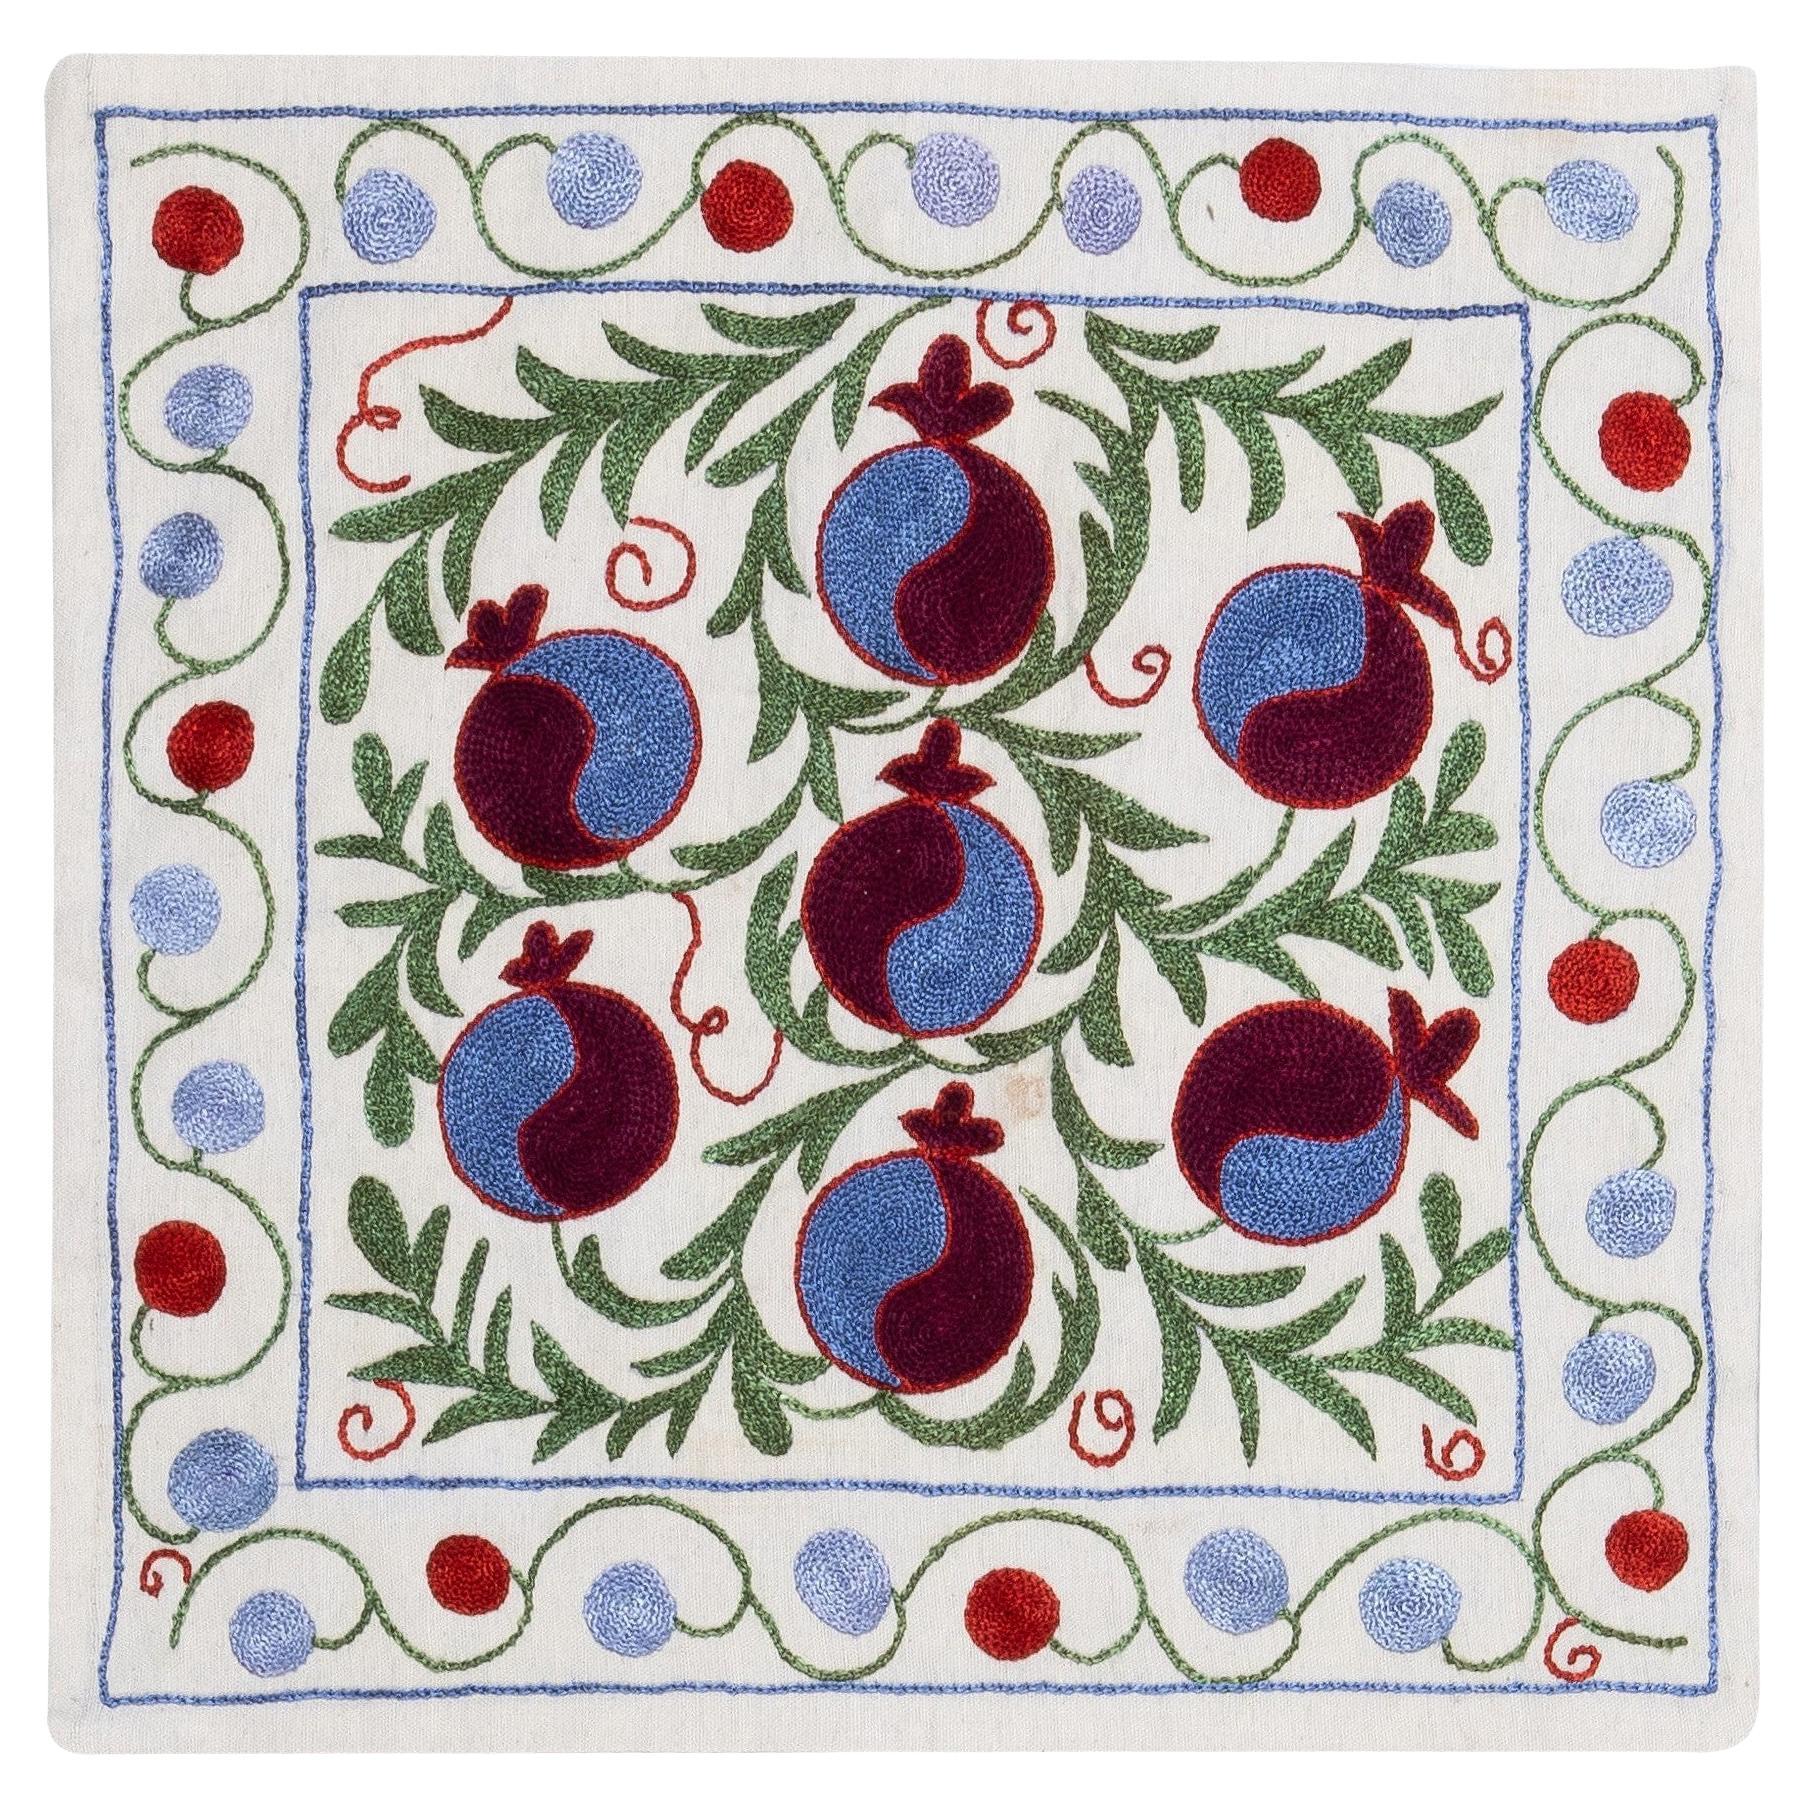 17"x17" Decorative Silk Embroidered Suzani Cushion Cover from Uzbekistan